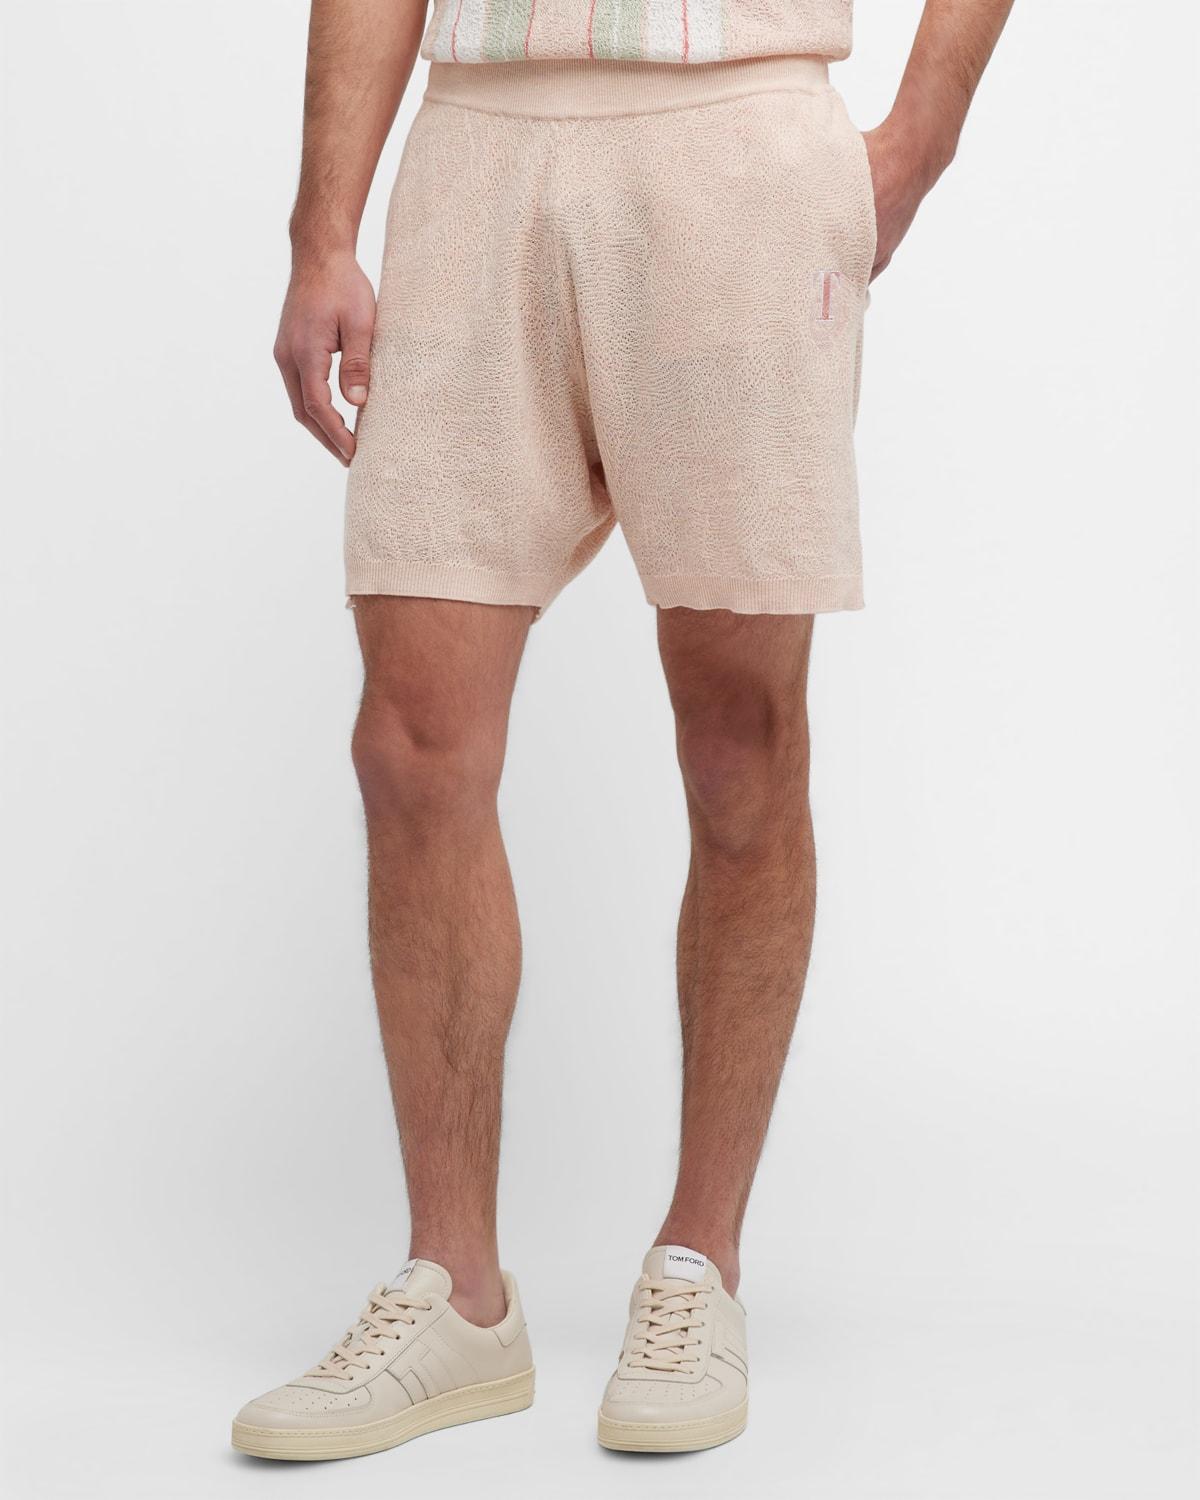 TWENTY MONTREAL Identity Gauzy Knit Shorts in Natural for Men